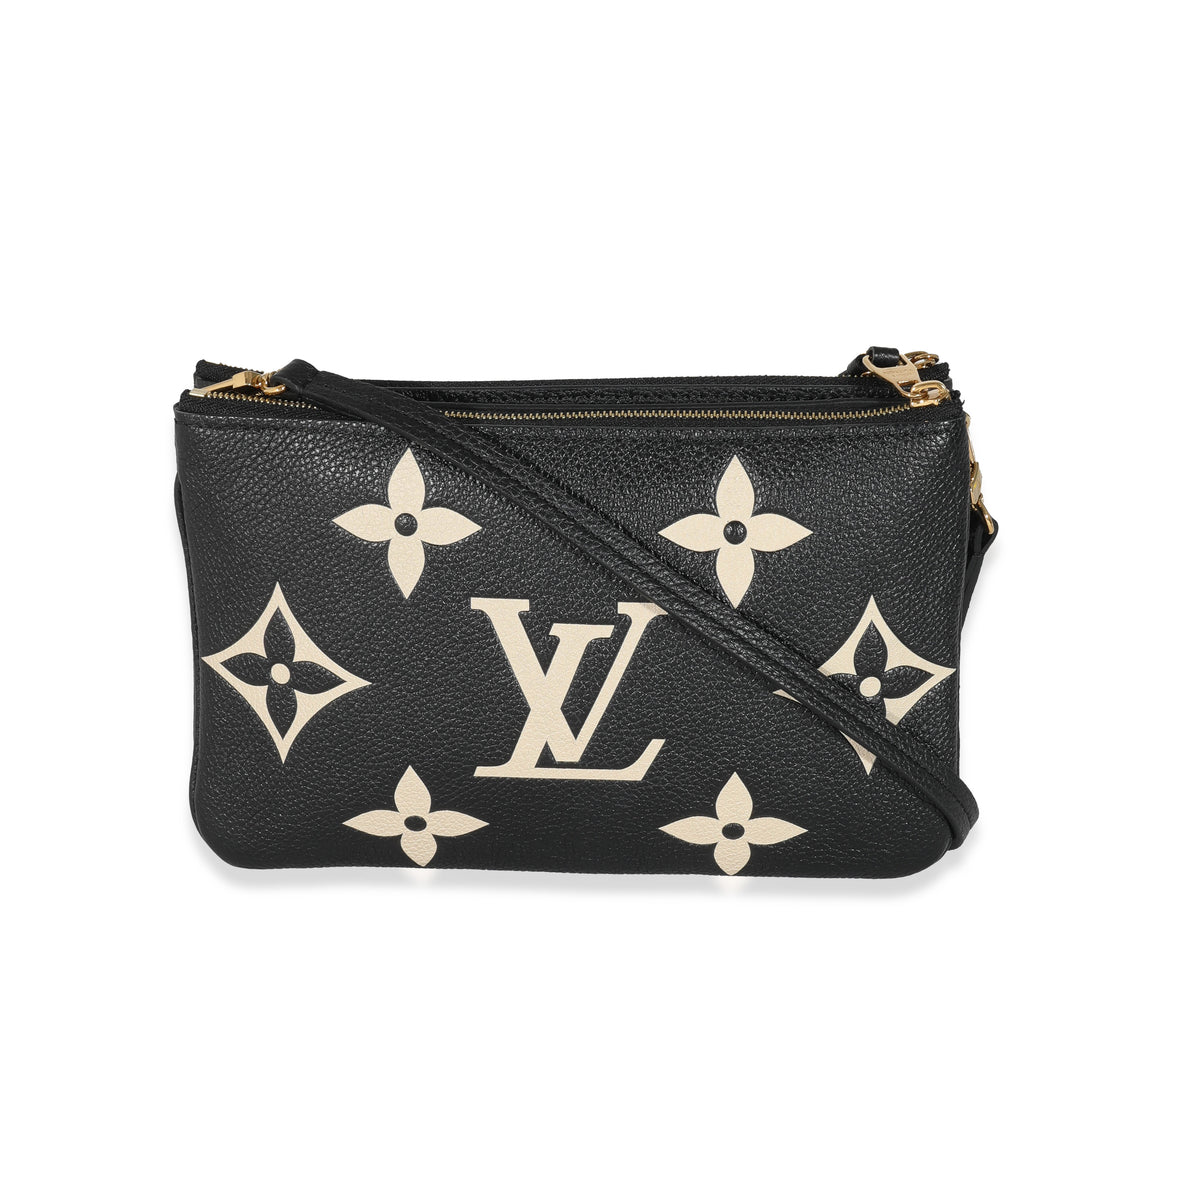 Louis Vuitton Double Zip Pochette Bicolore Black Beige Monogram Empreinte